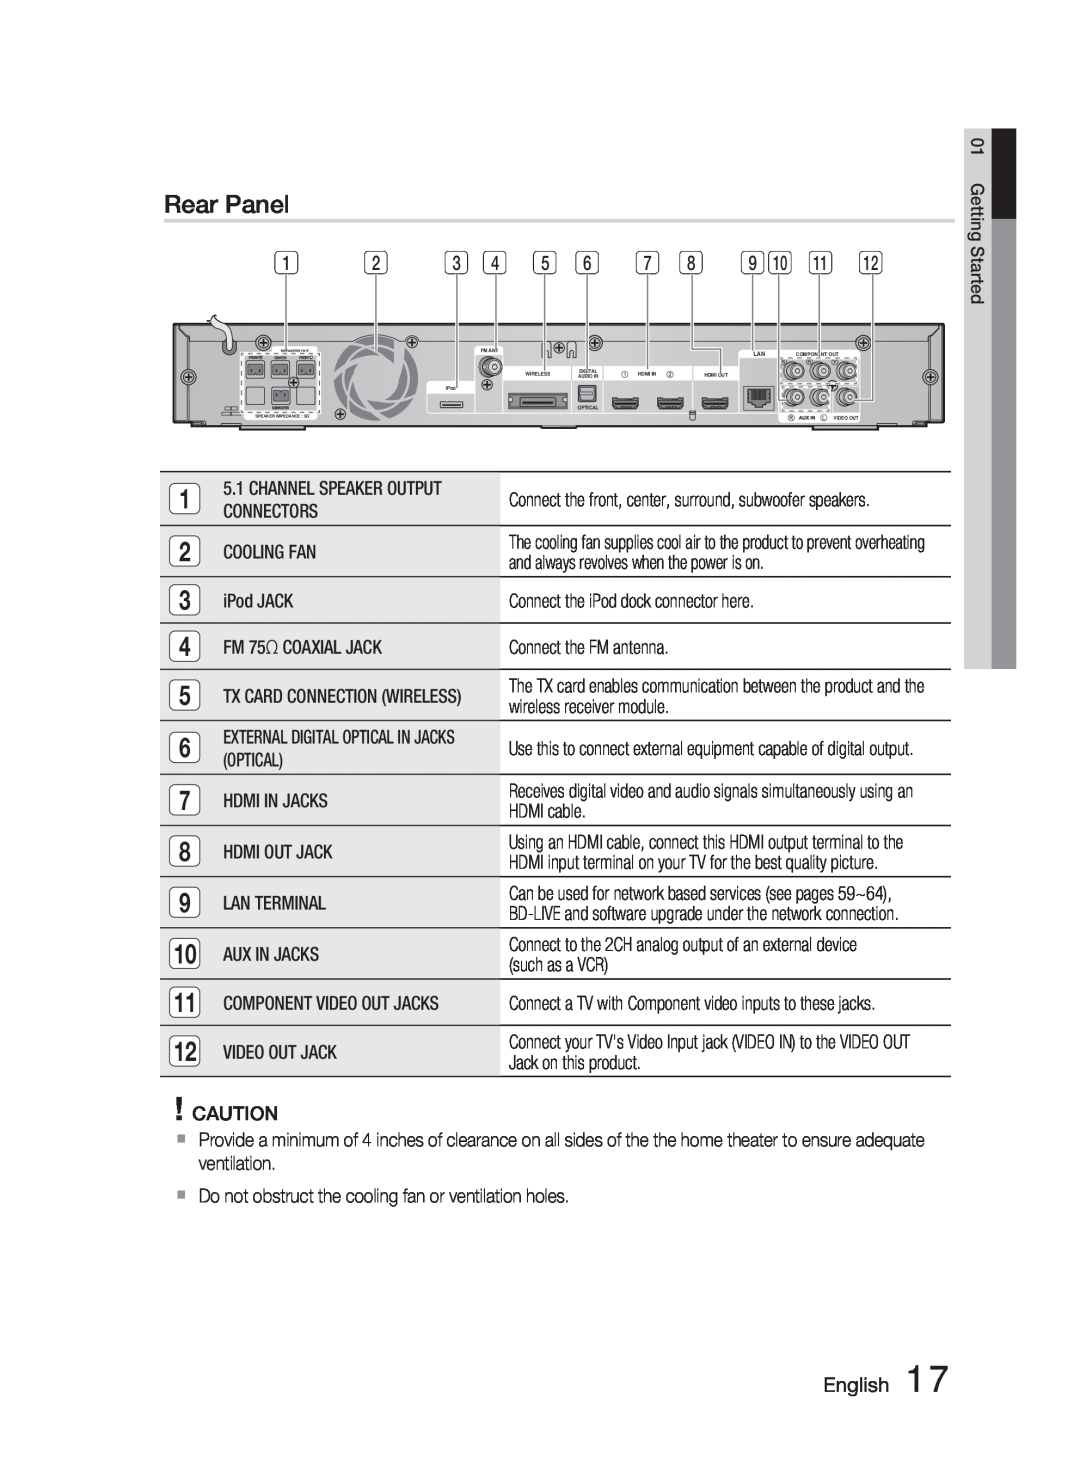 Samsung HT-C6900W user manual Rear Panel, English 